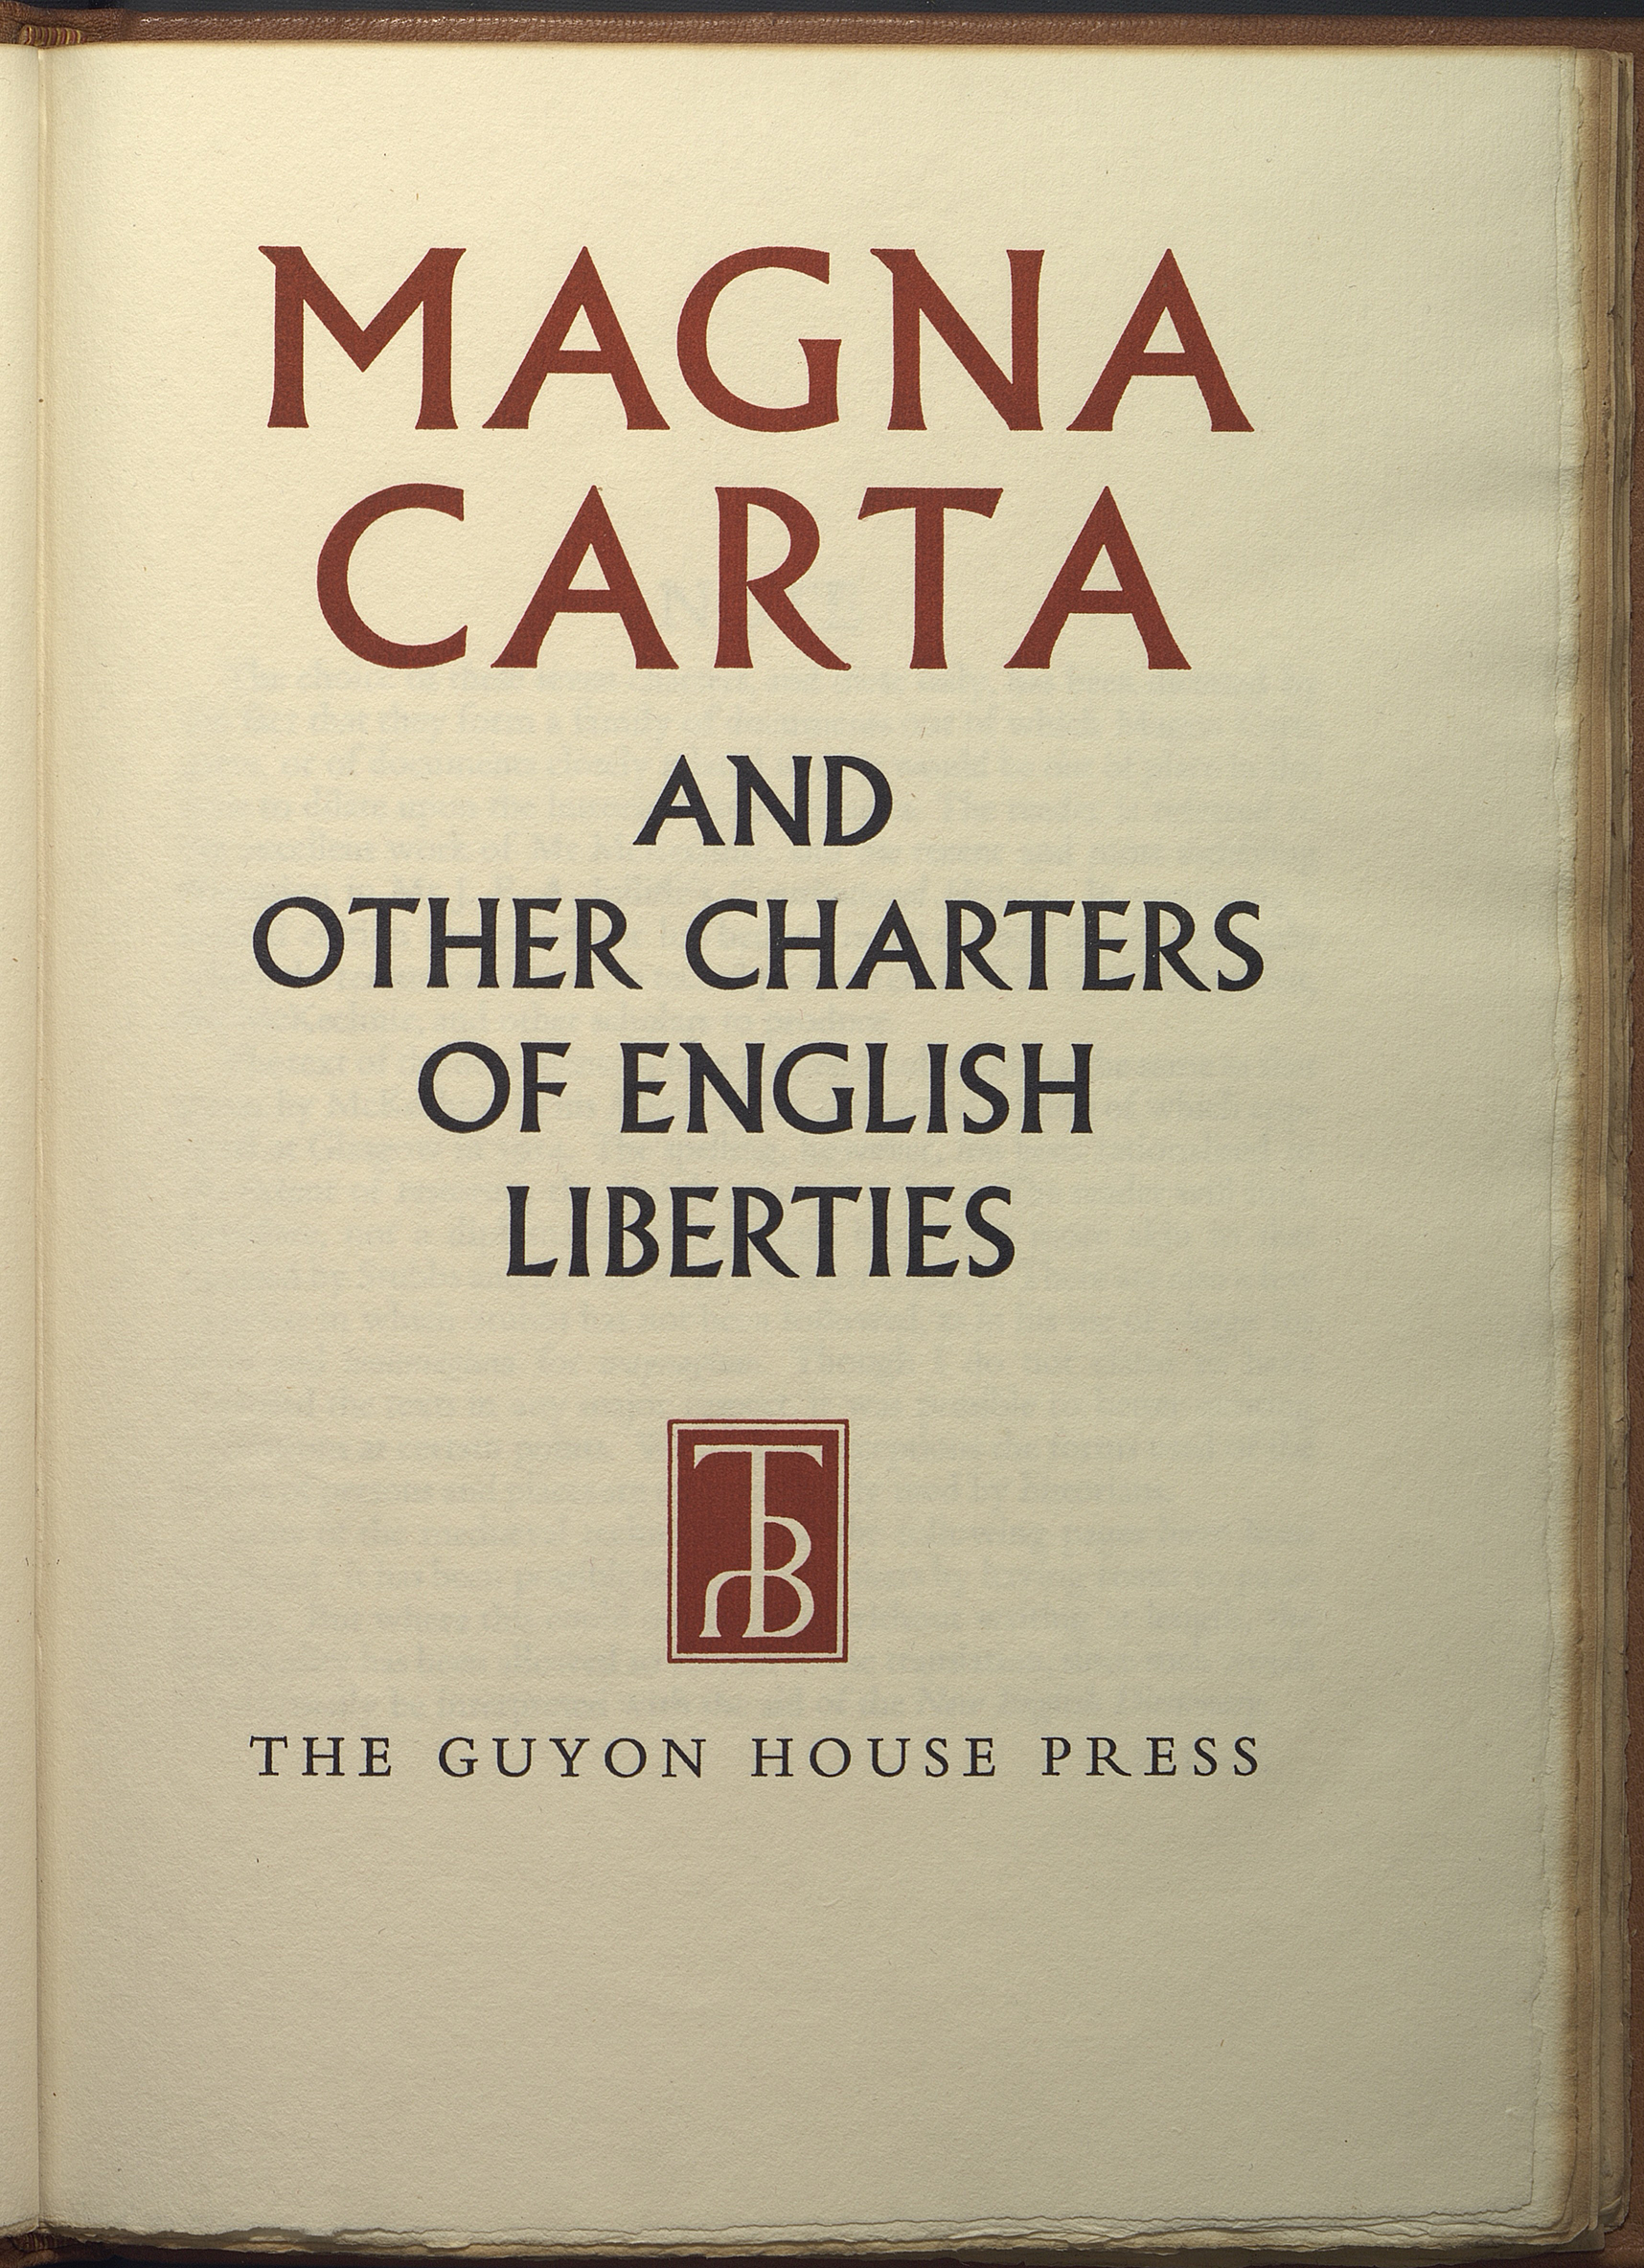 Magna Carta printed by the Guyon House Press